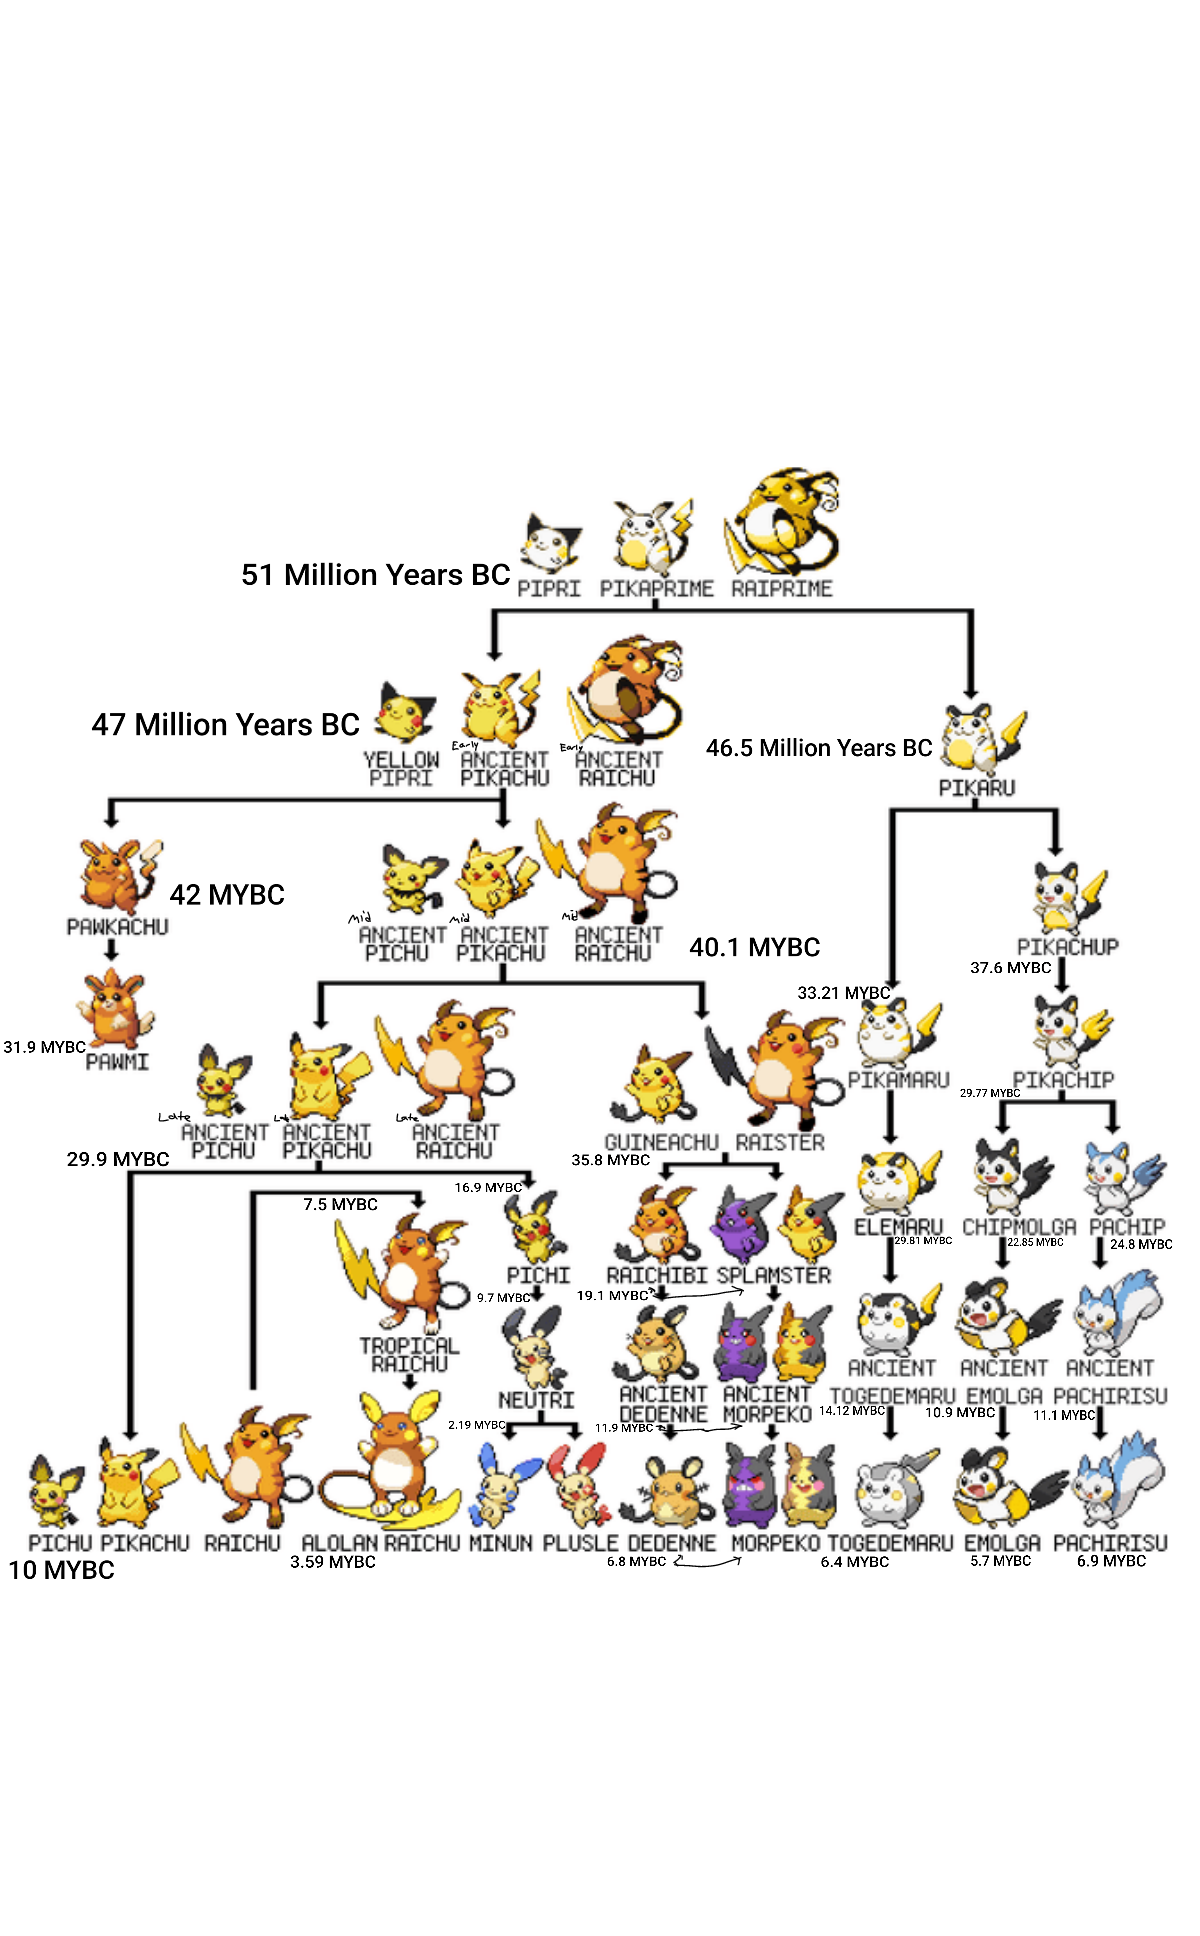 Pokemon Pikachu Evolutions